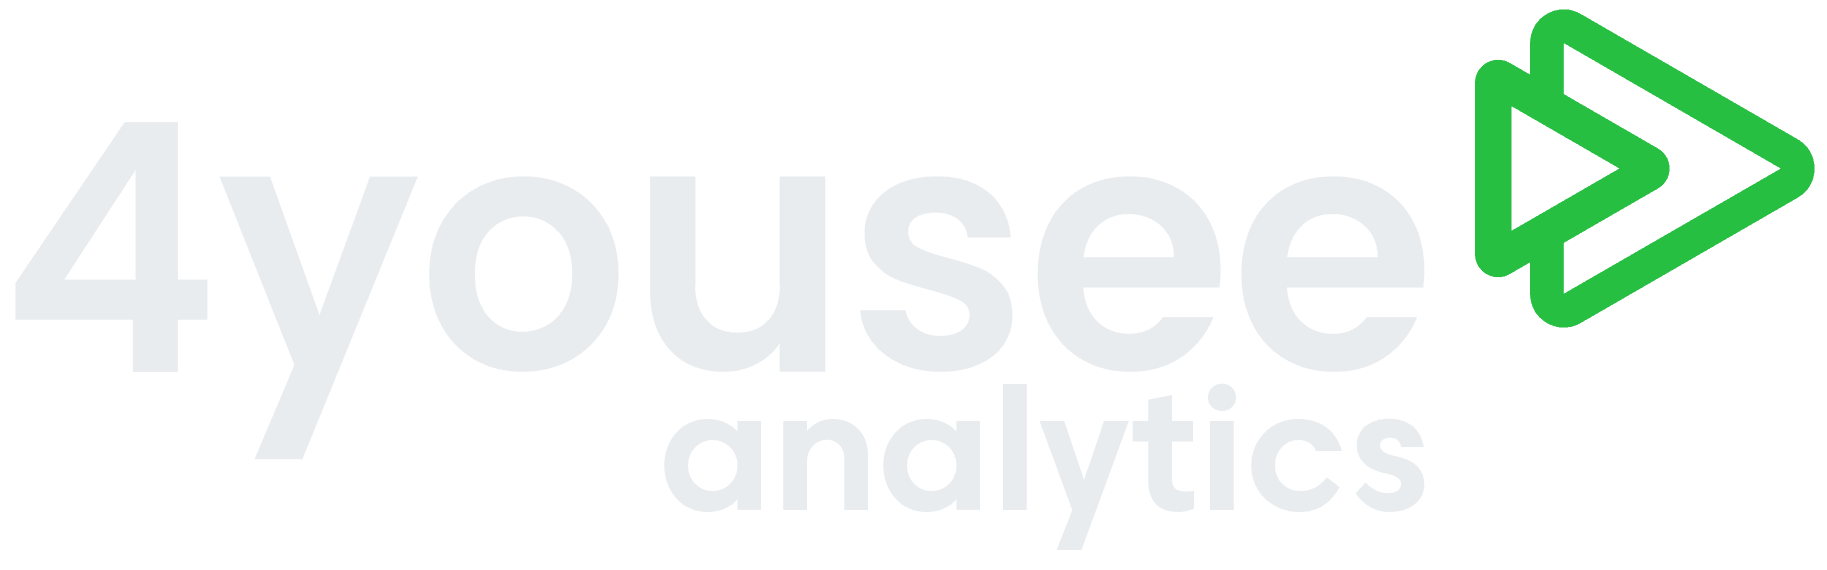 Logo 4yousee analytics